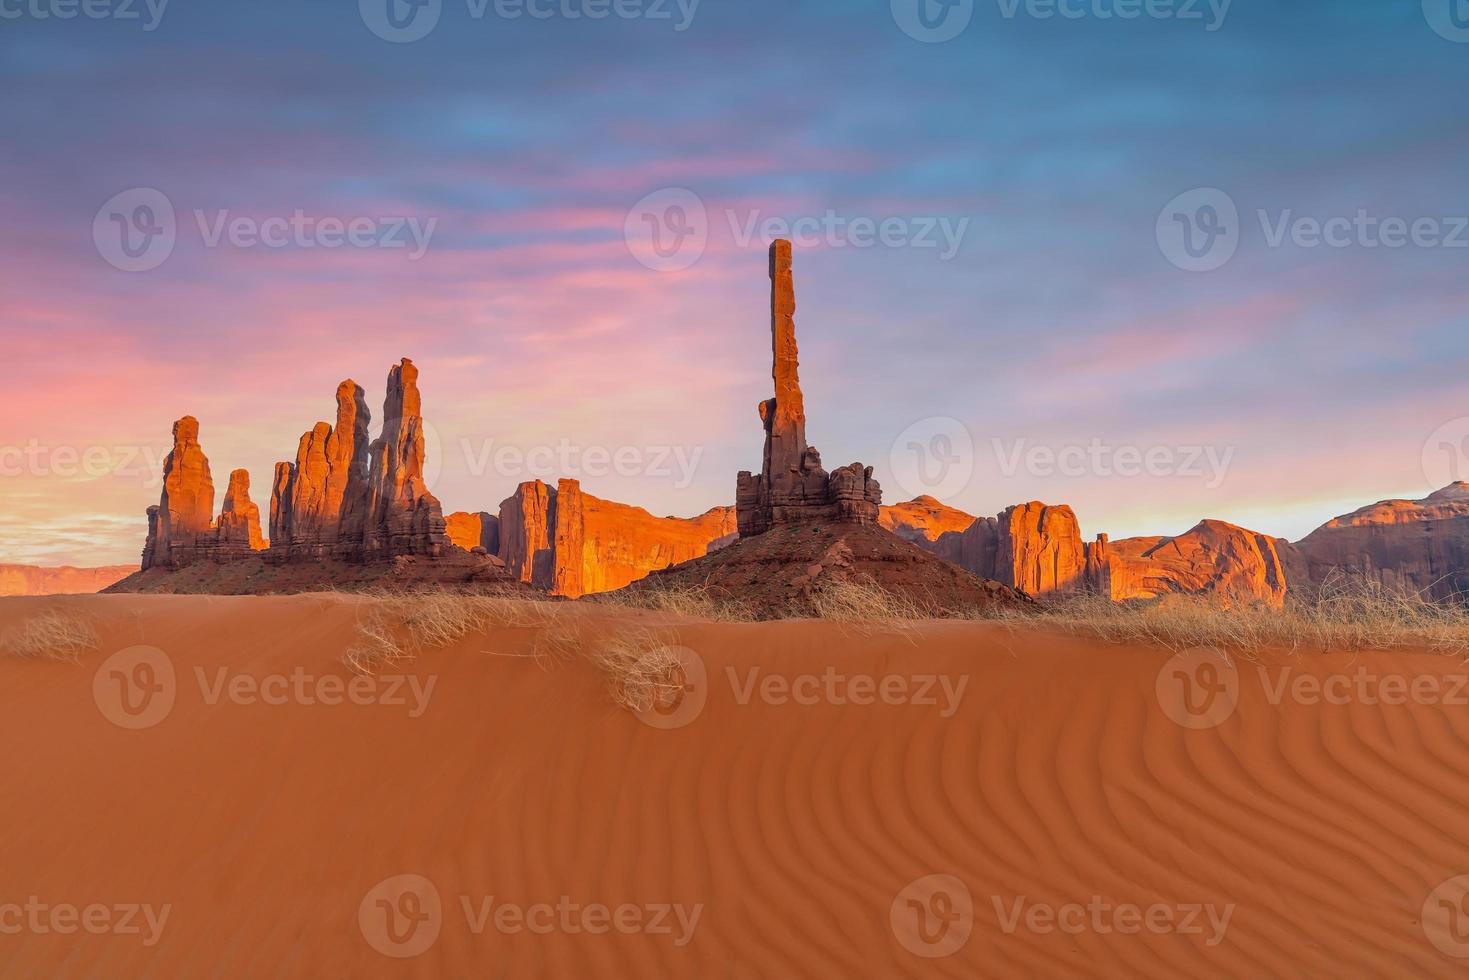 totempåle och sanddyner i monument valley, arizona usa foto